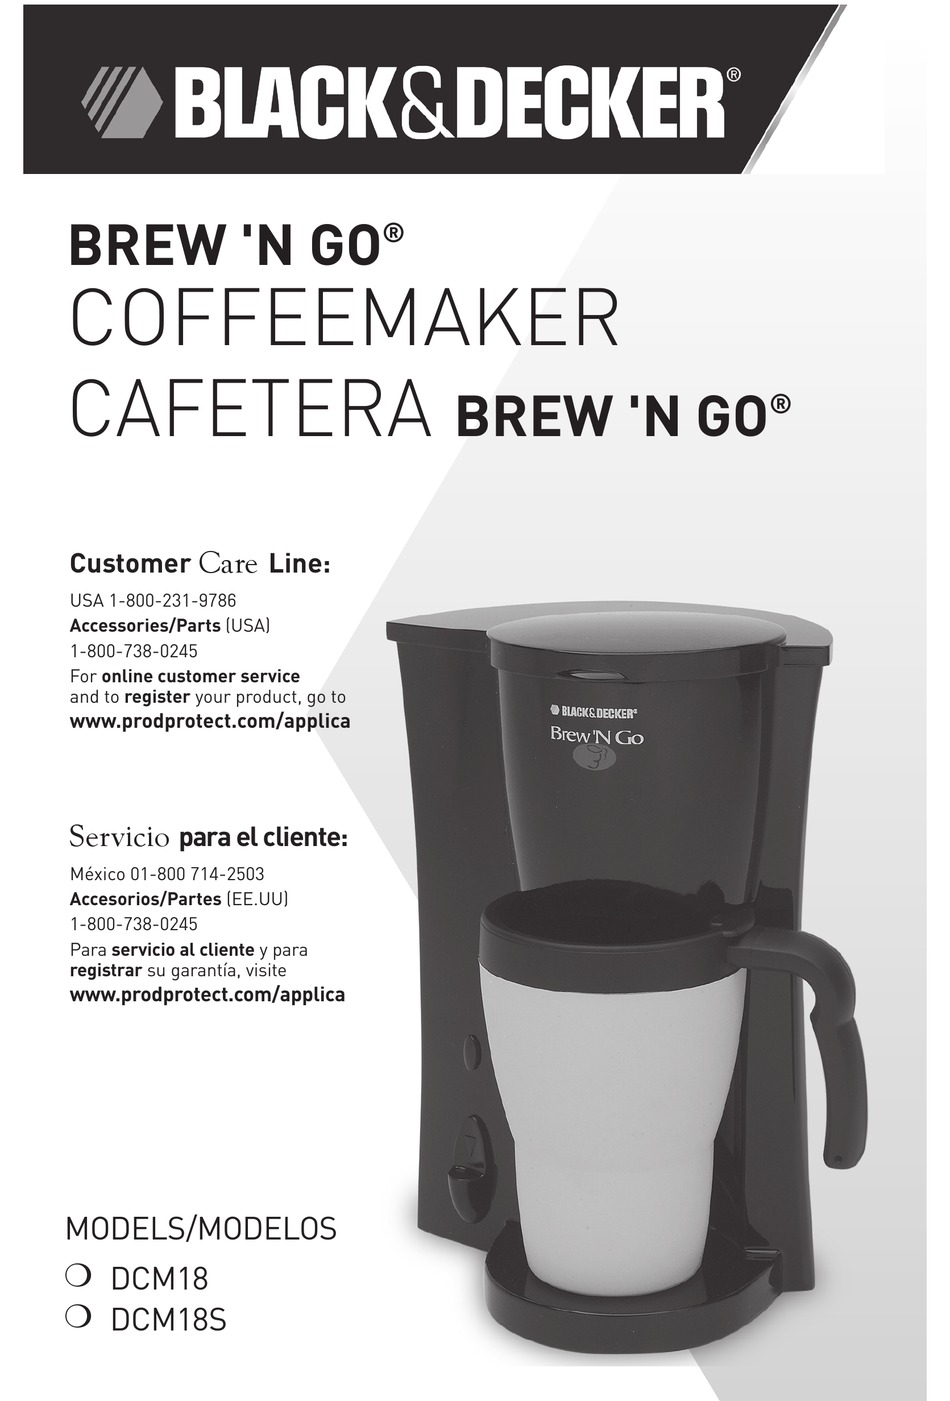 Black & Decker Personal Brew n' Go Coffeemaker DCM16